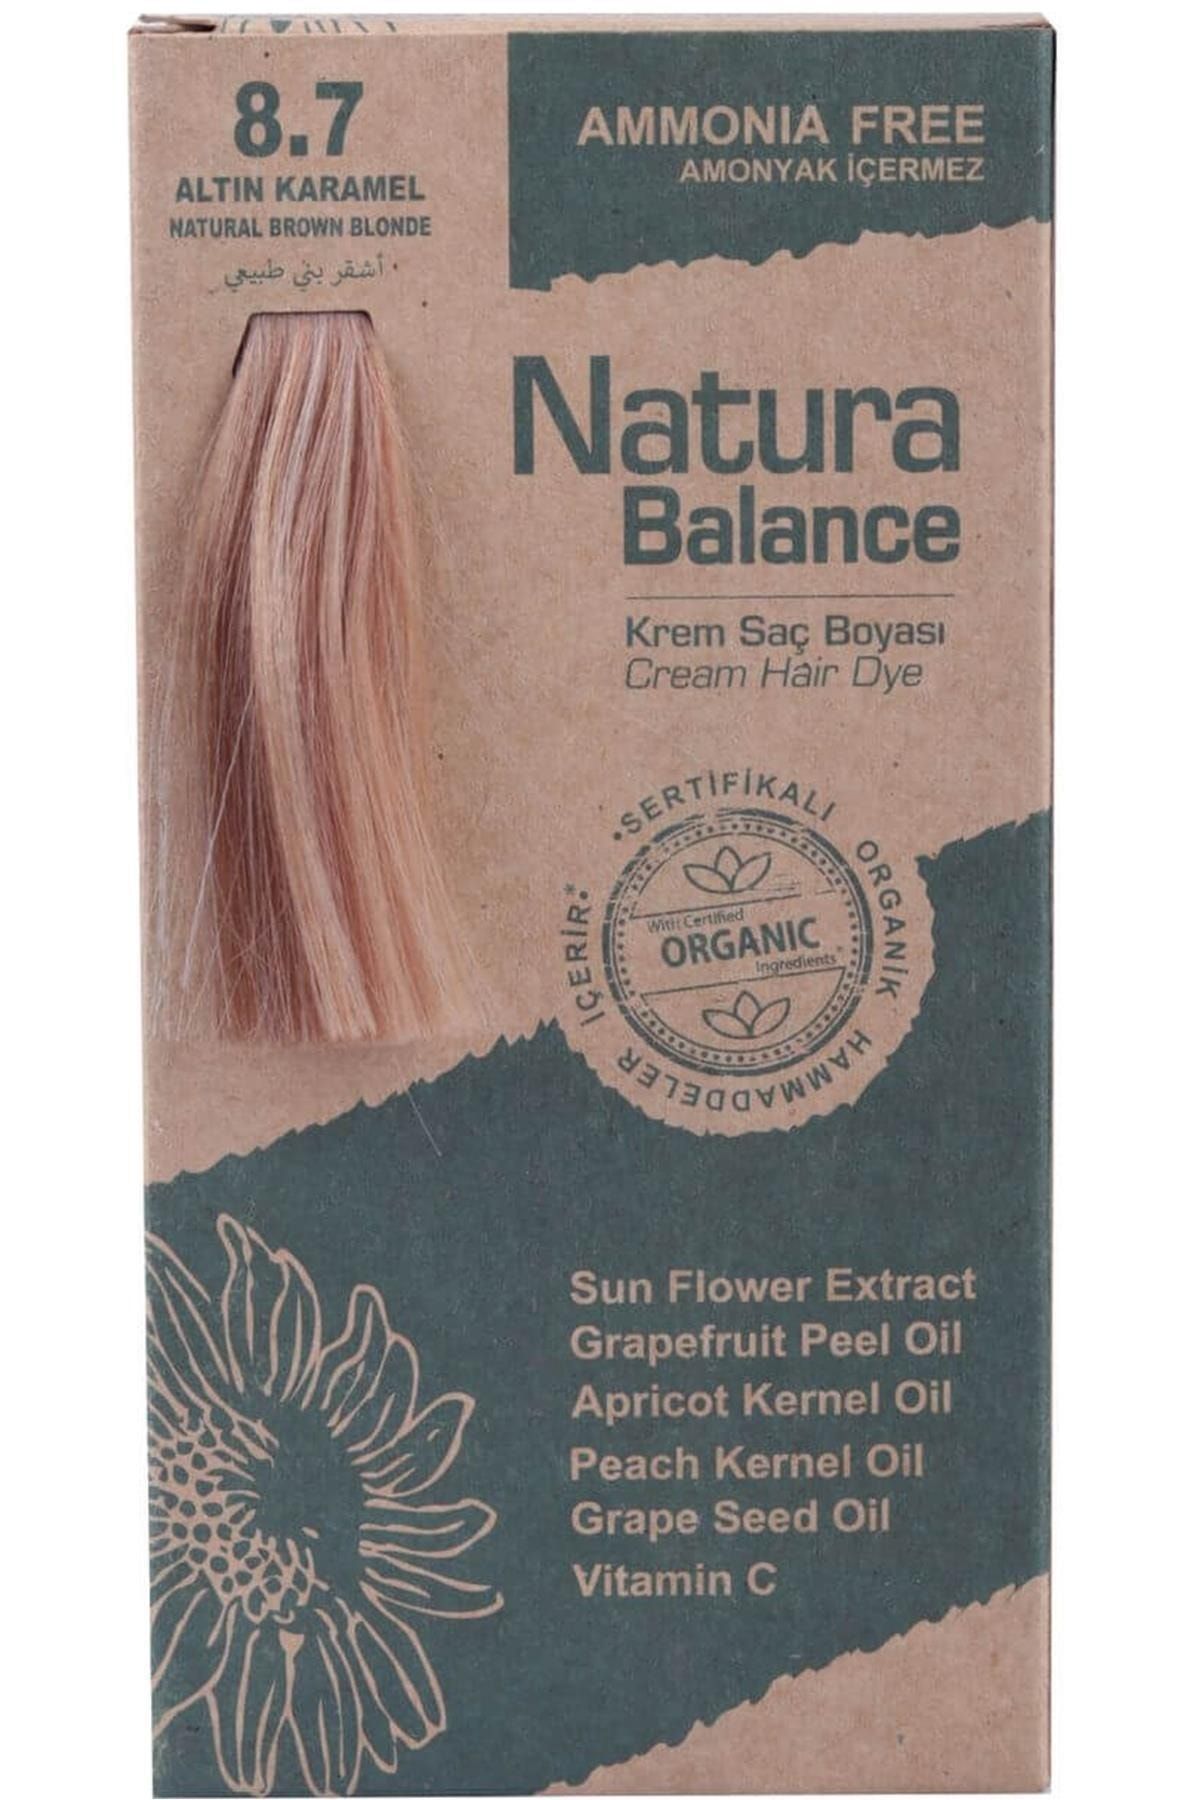 NATURABALANCE Natura Balance Krem Saç Boyası Altın Karamel 8.7